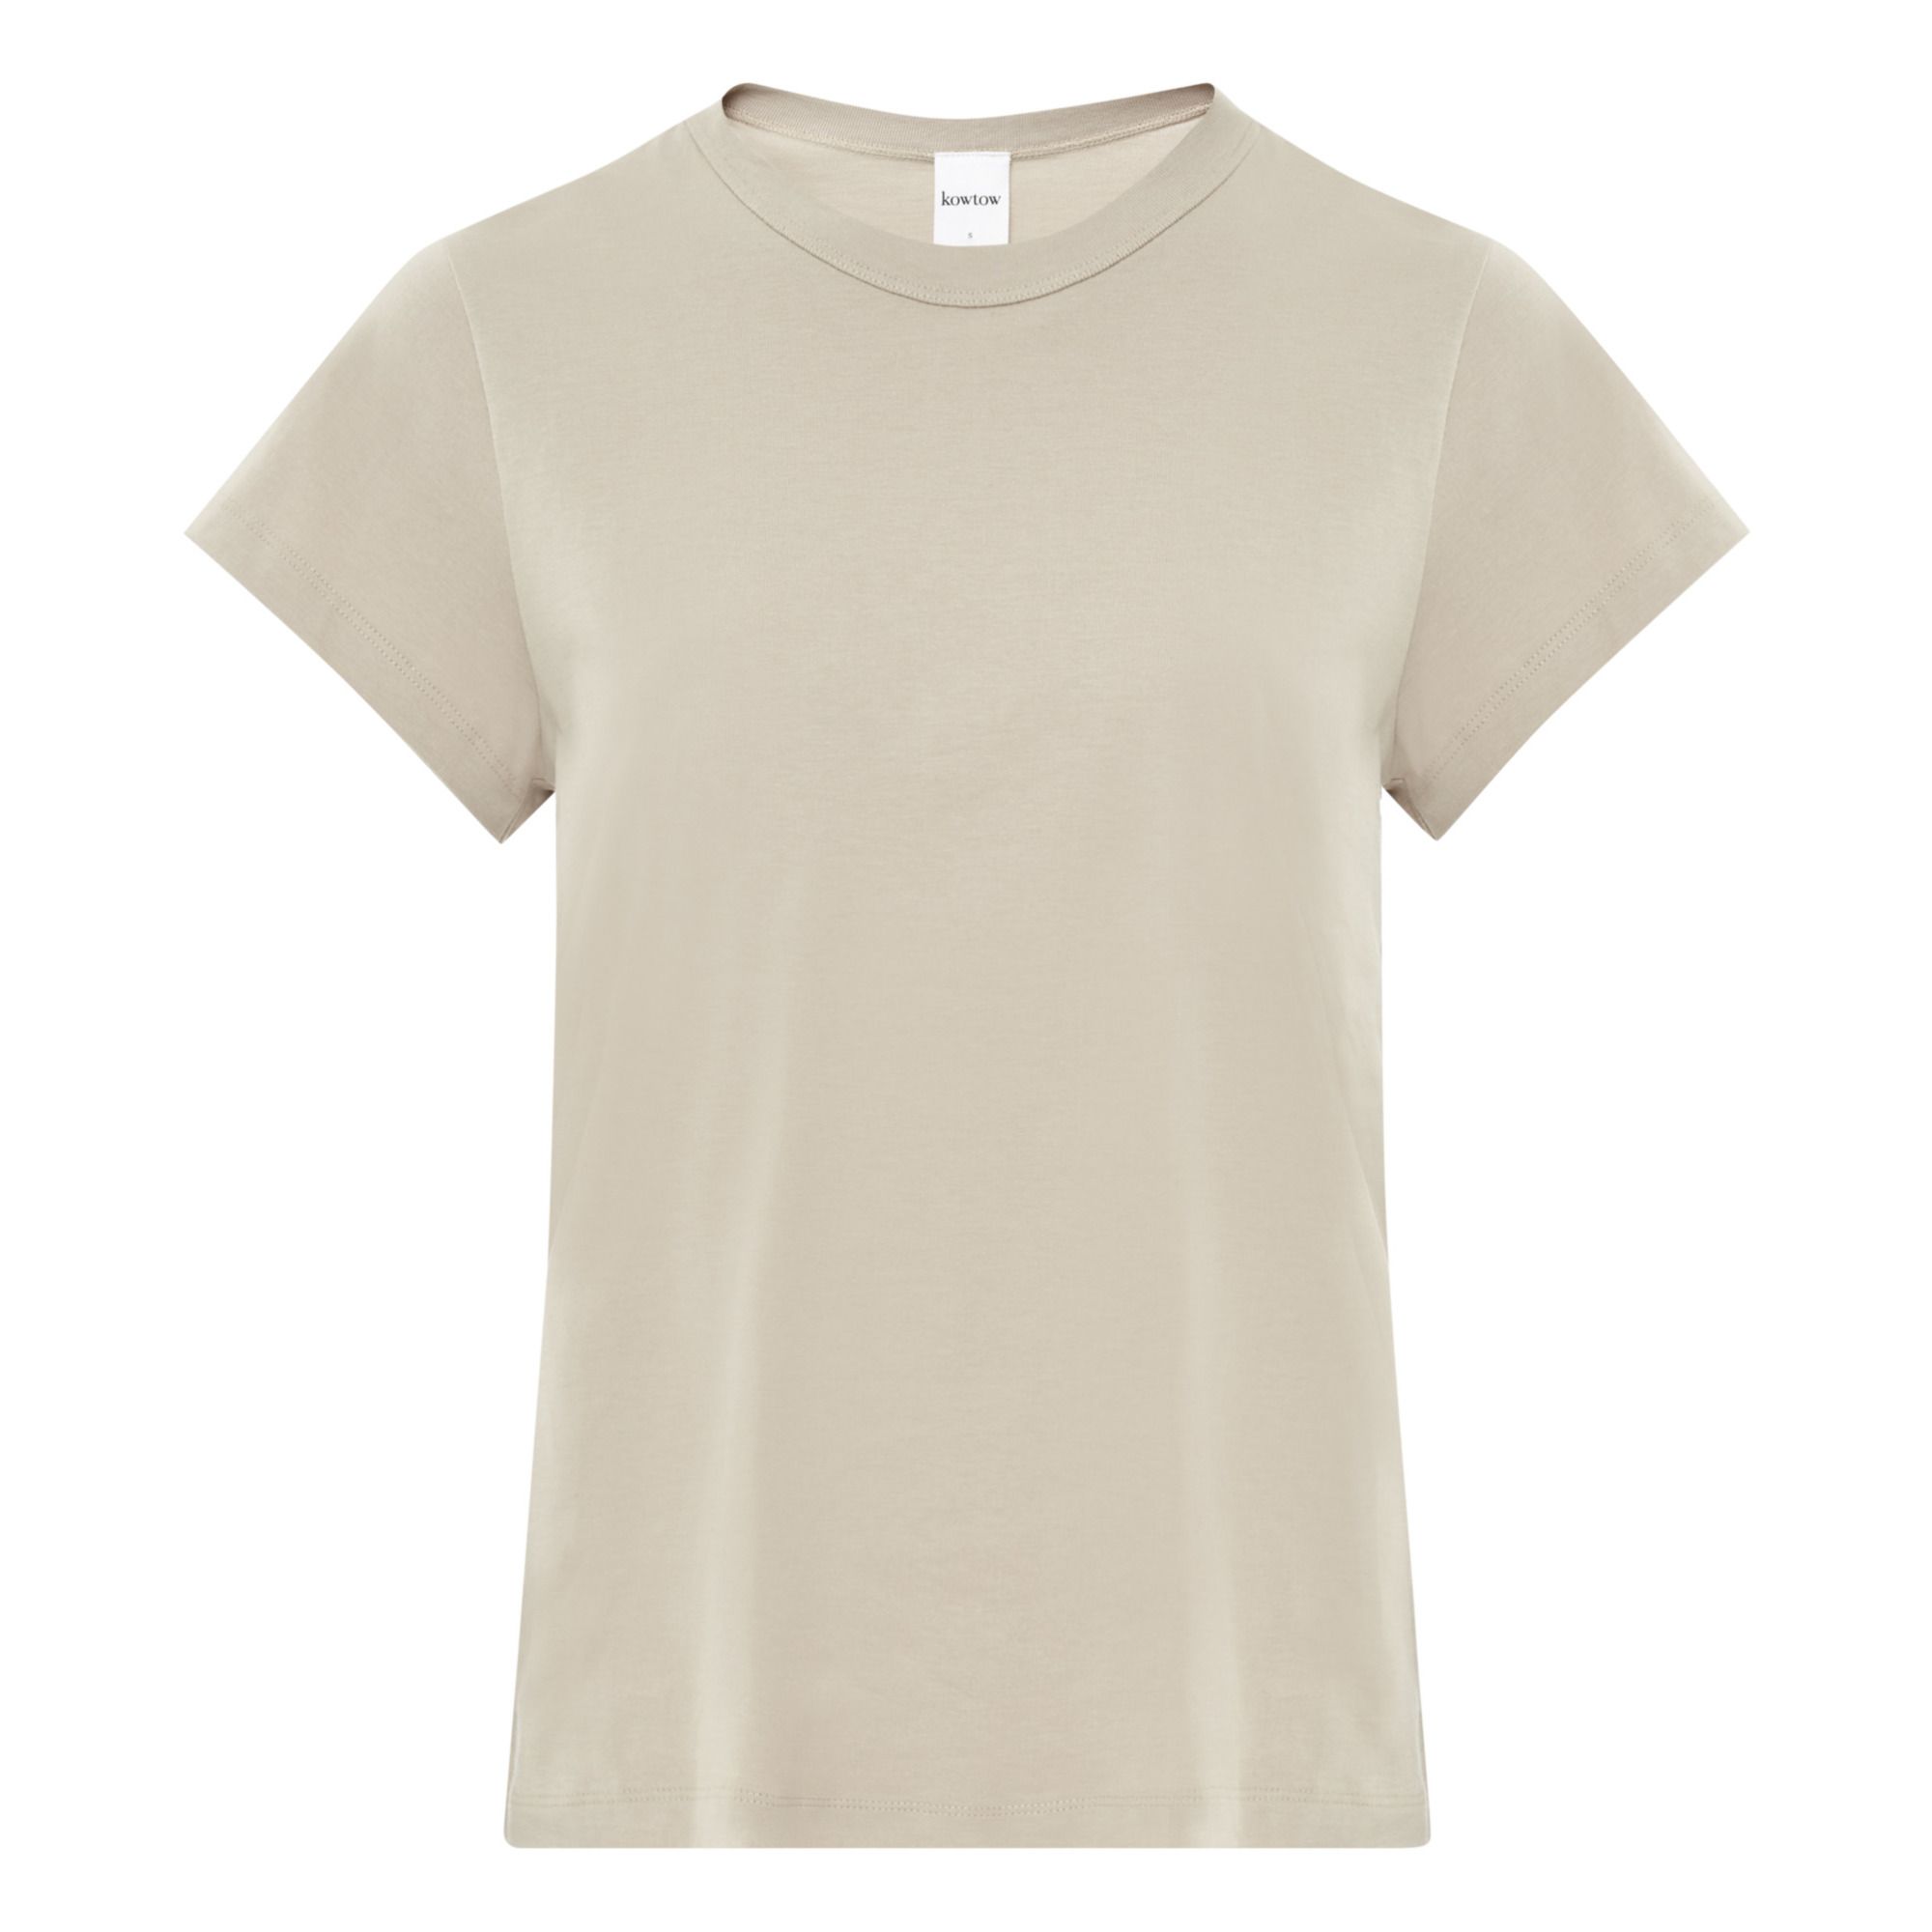 Kowtow - T-shirt Cap Coton Bio - Femme - Beige